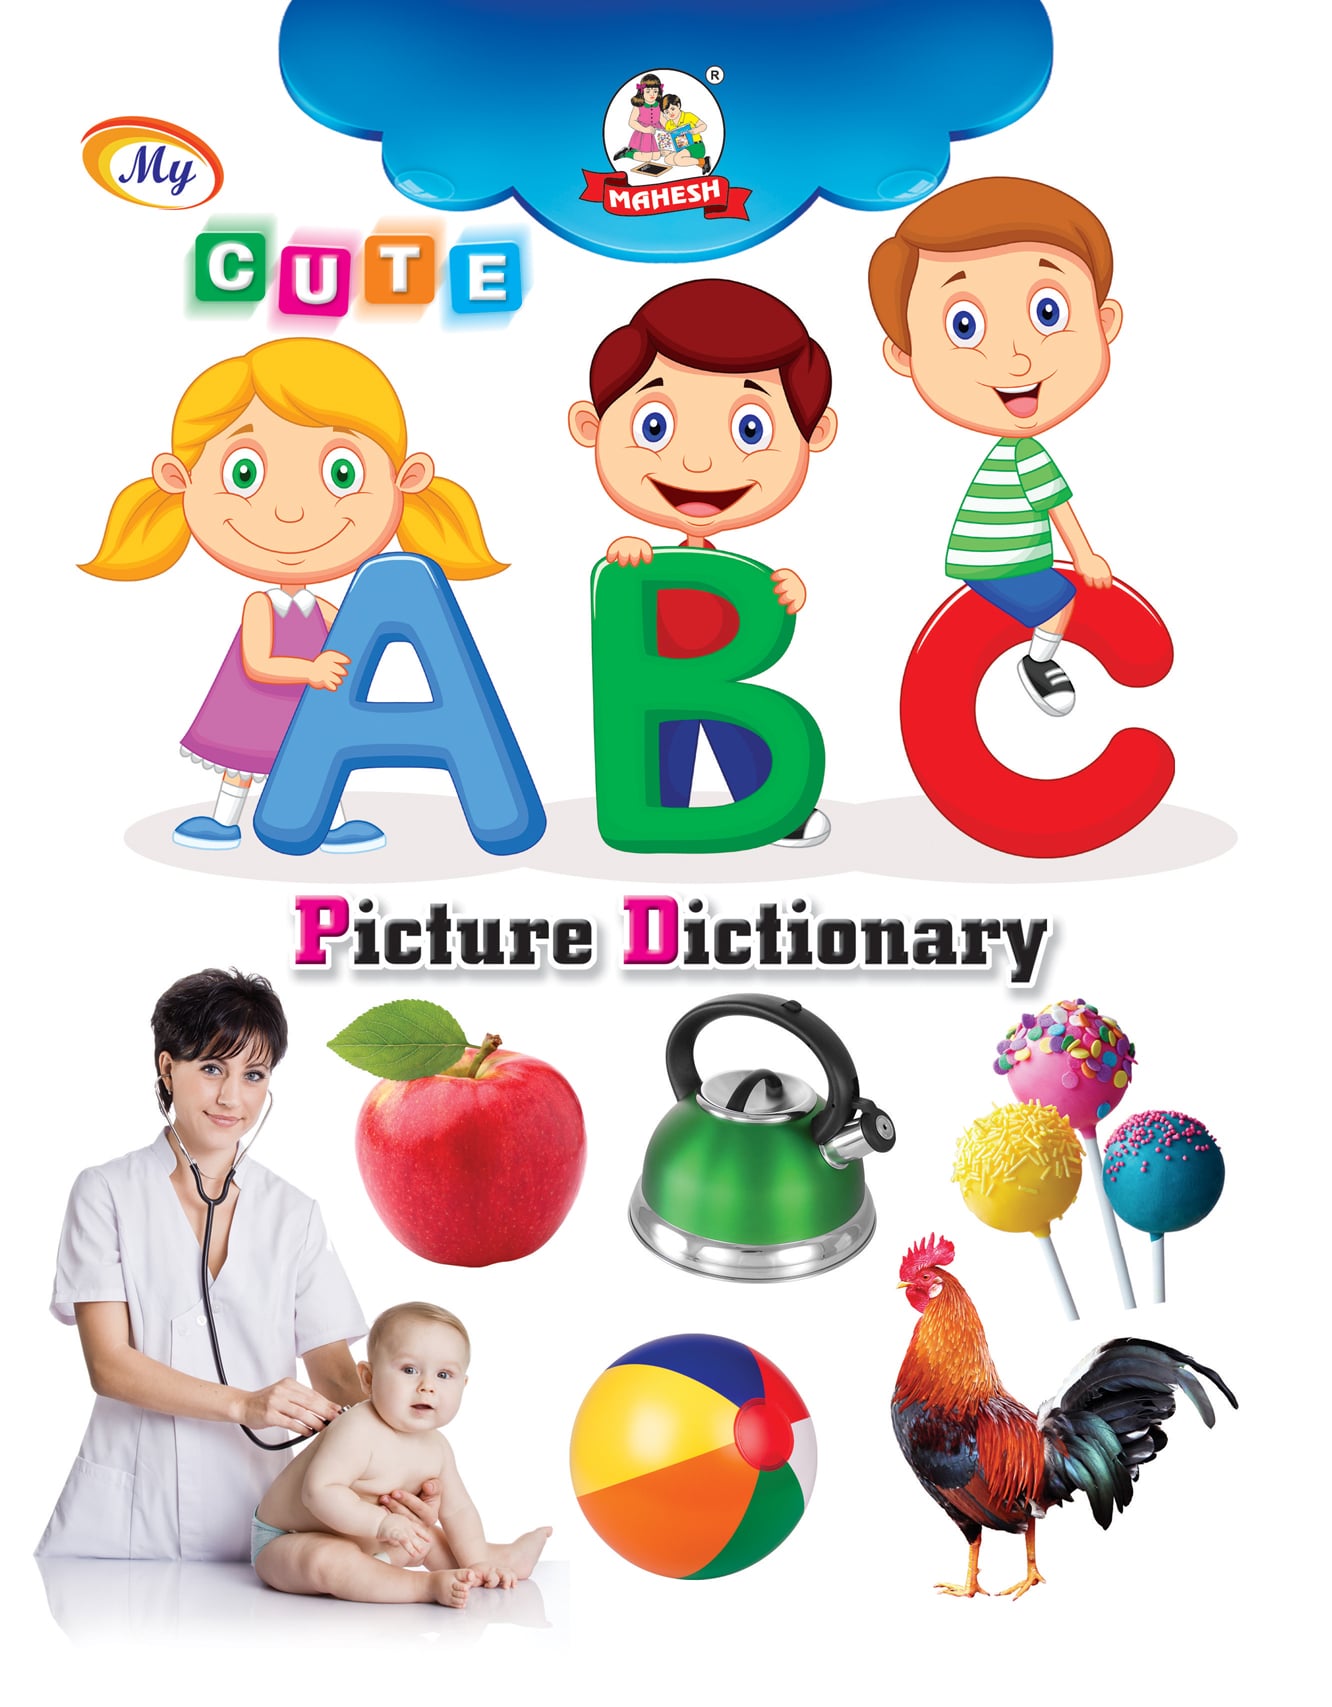 My Cute ABC Book